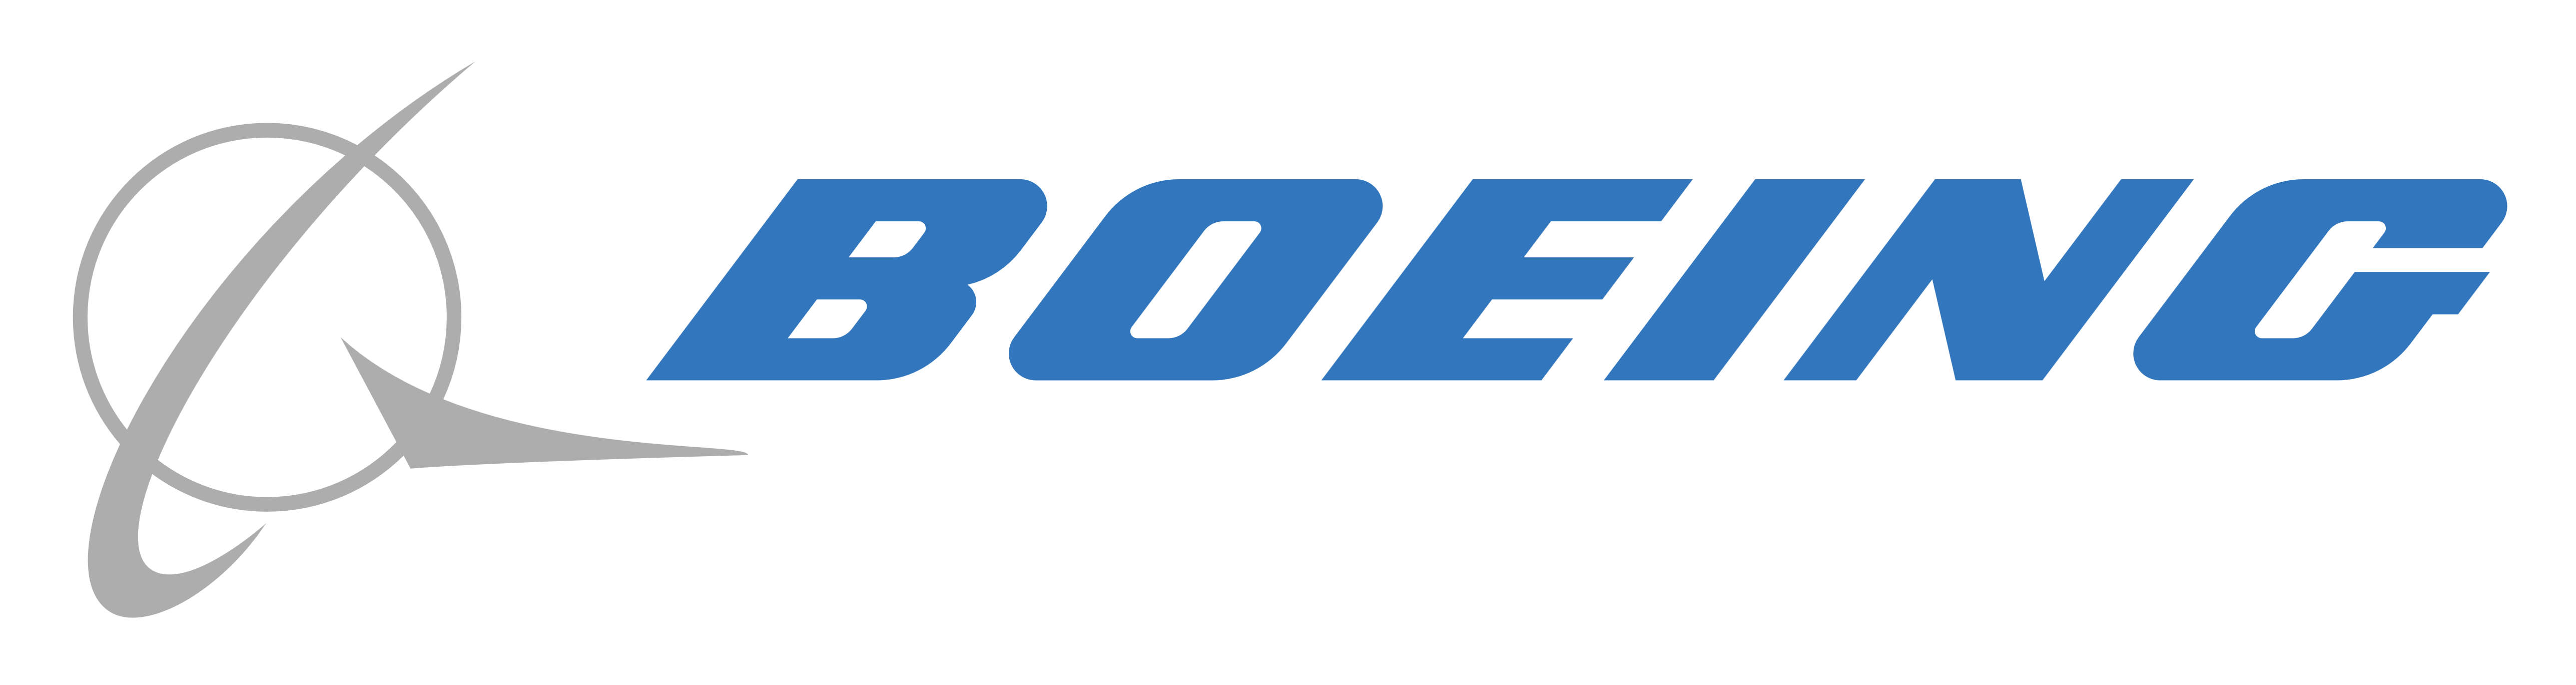 Boeing-logo